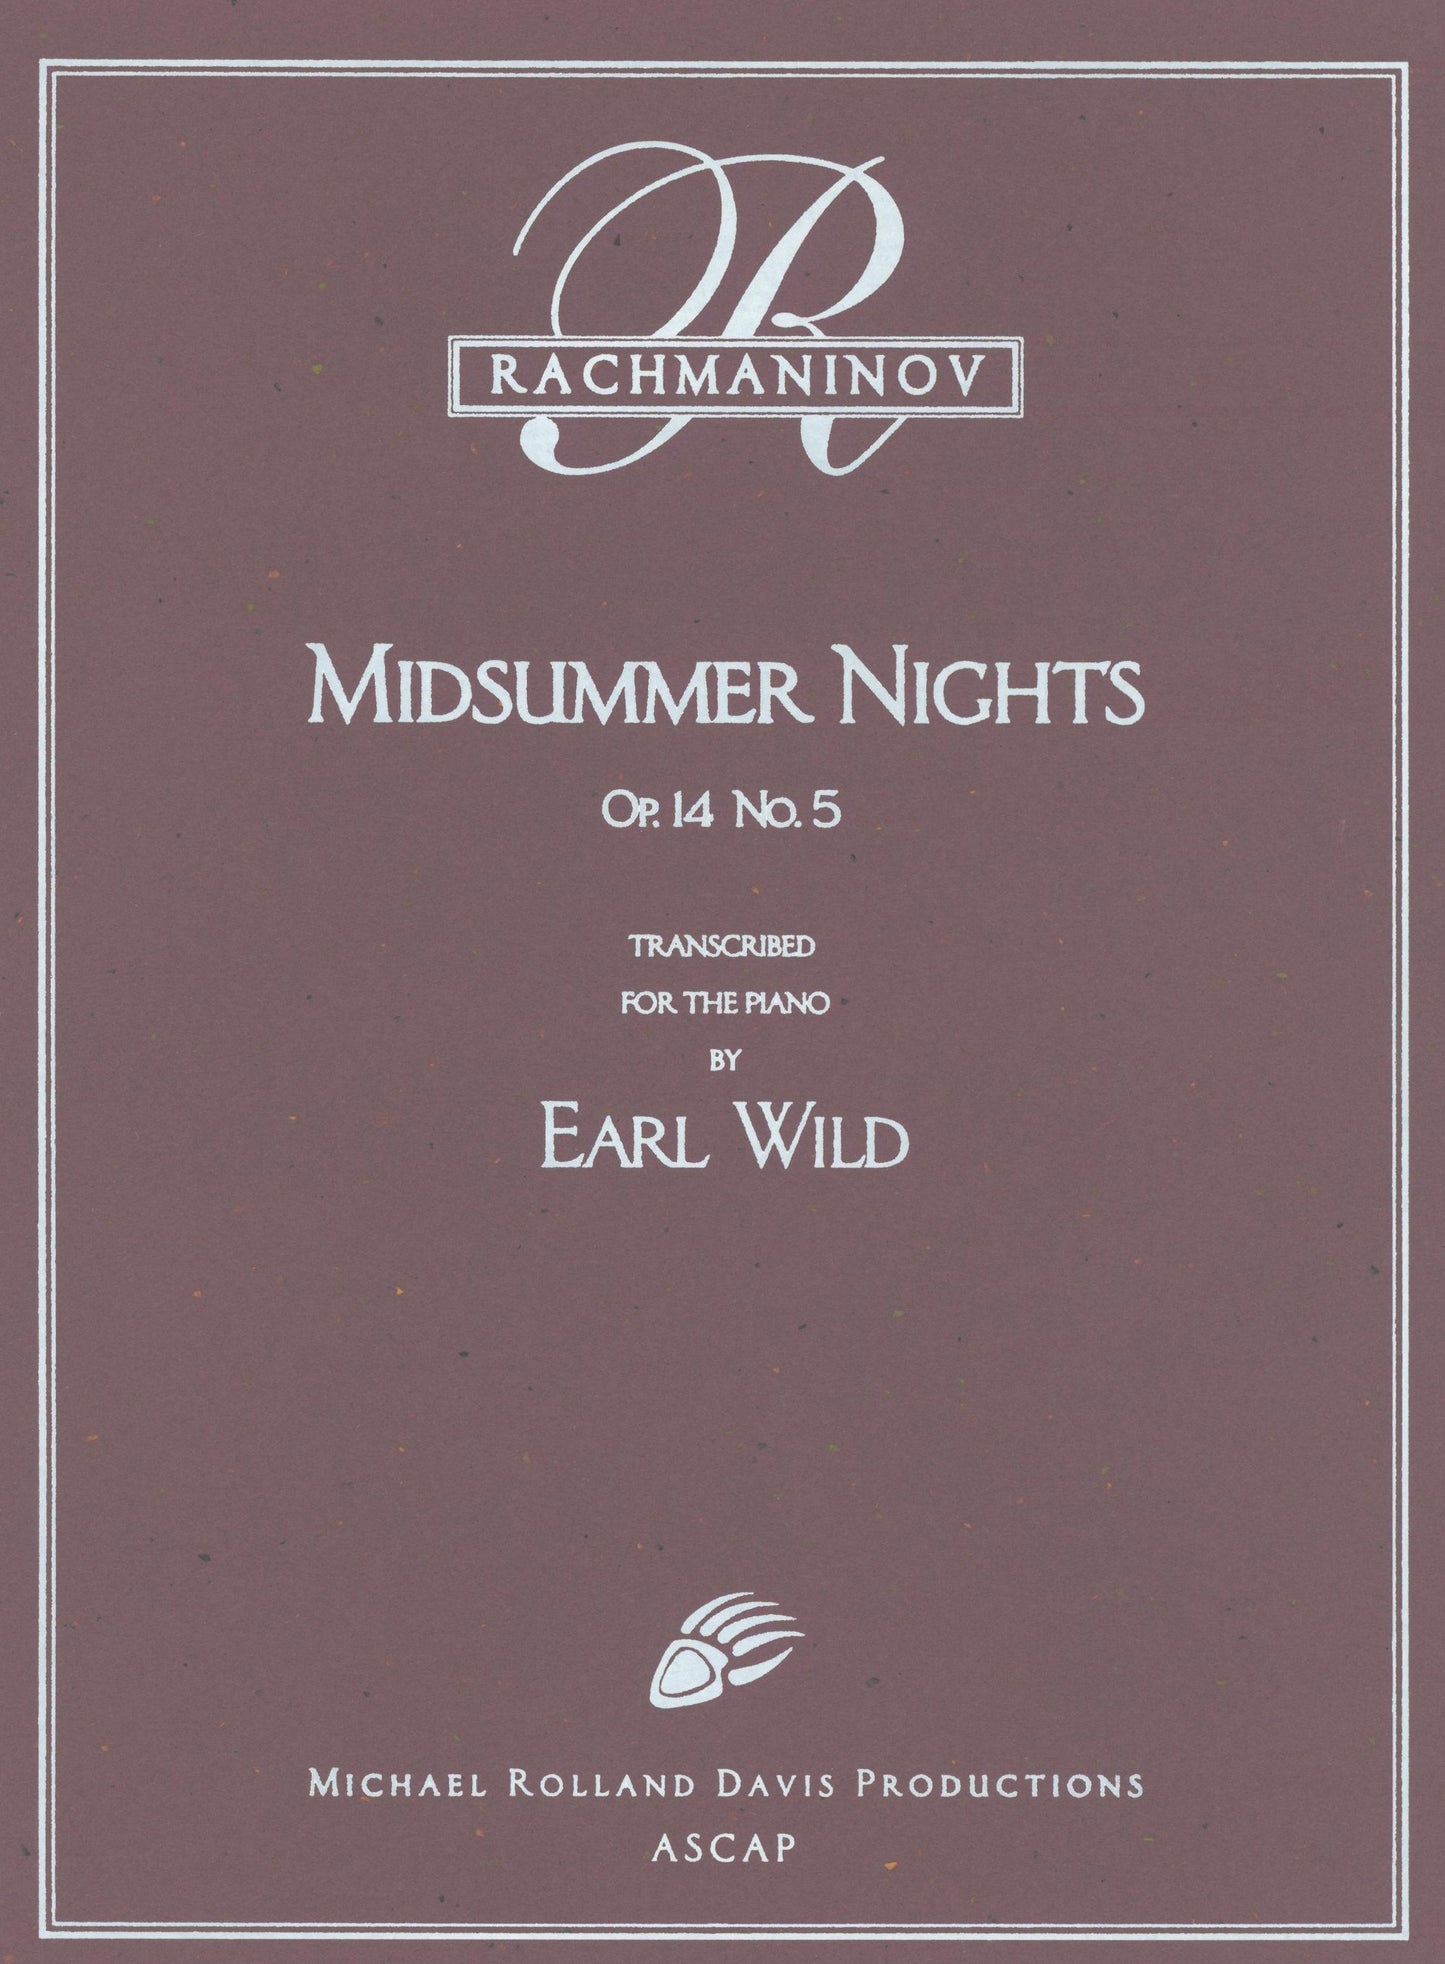 Rachmaninoff-Earl Wild: Midsummer Nights, Op. 14, No. 5